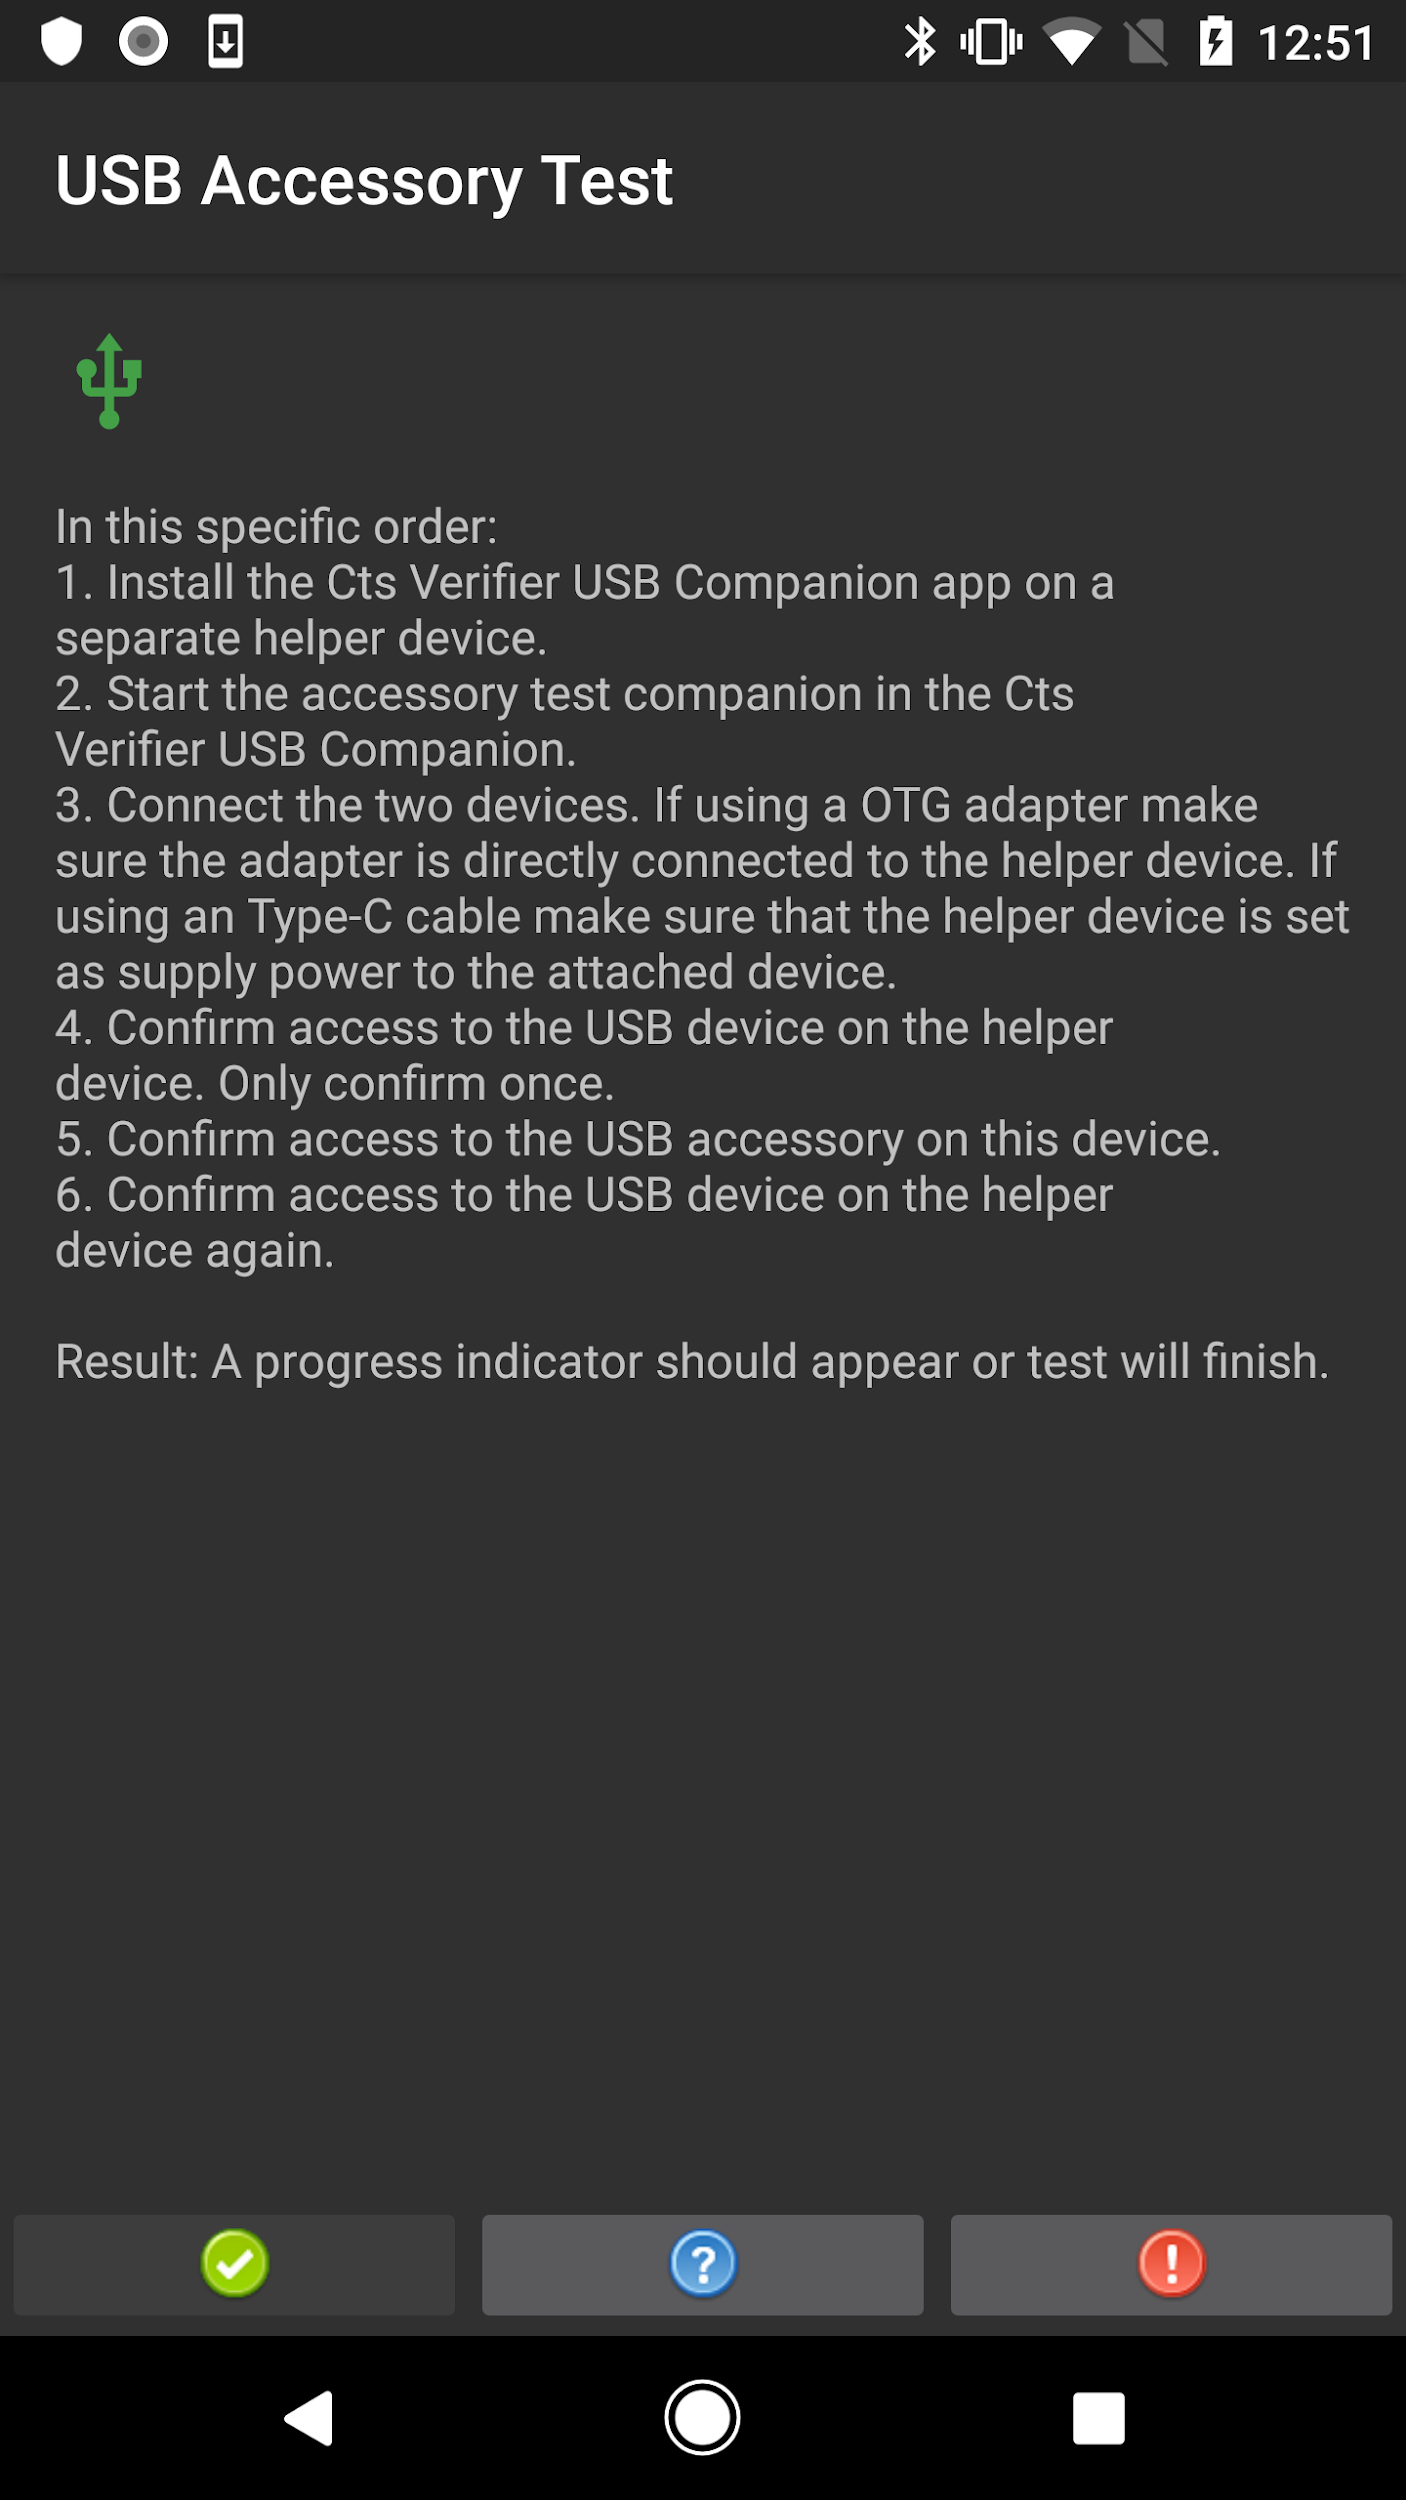 Тест USB-аксессуаров CTS Verifier